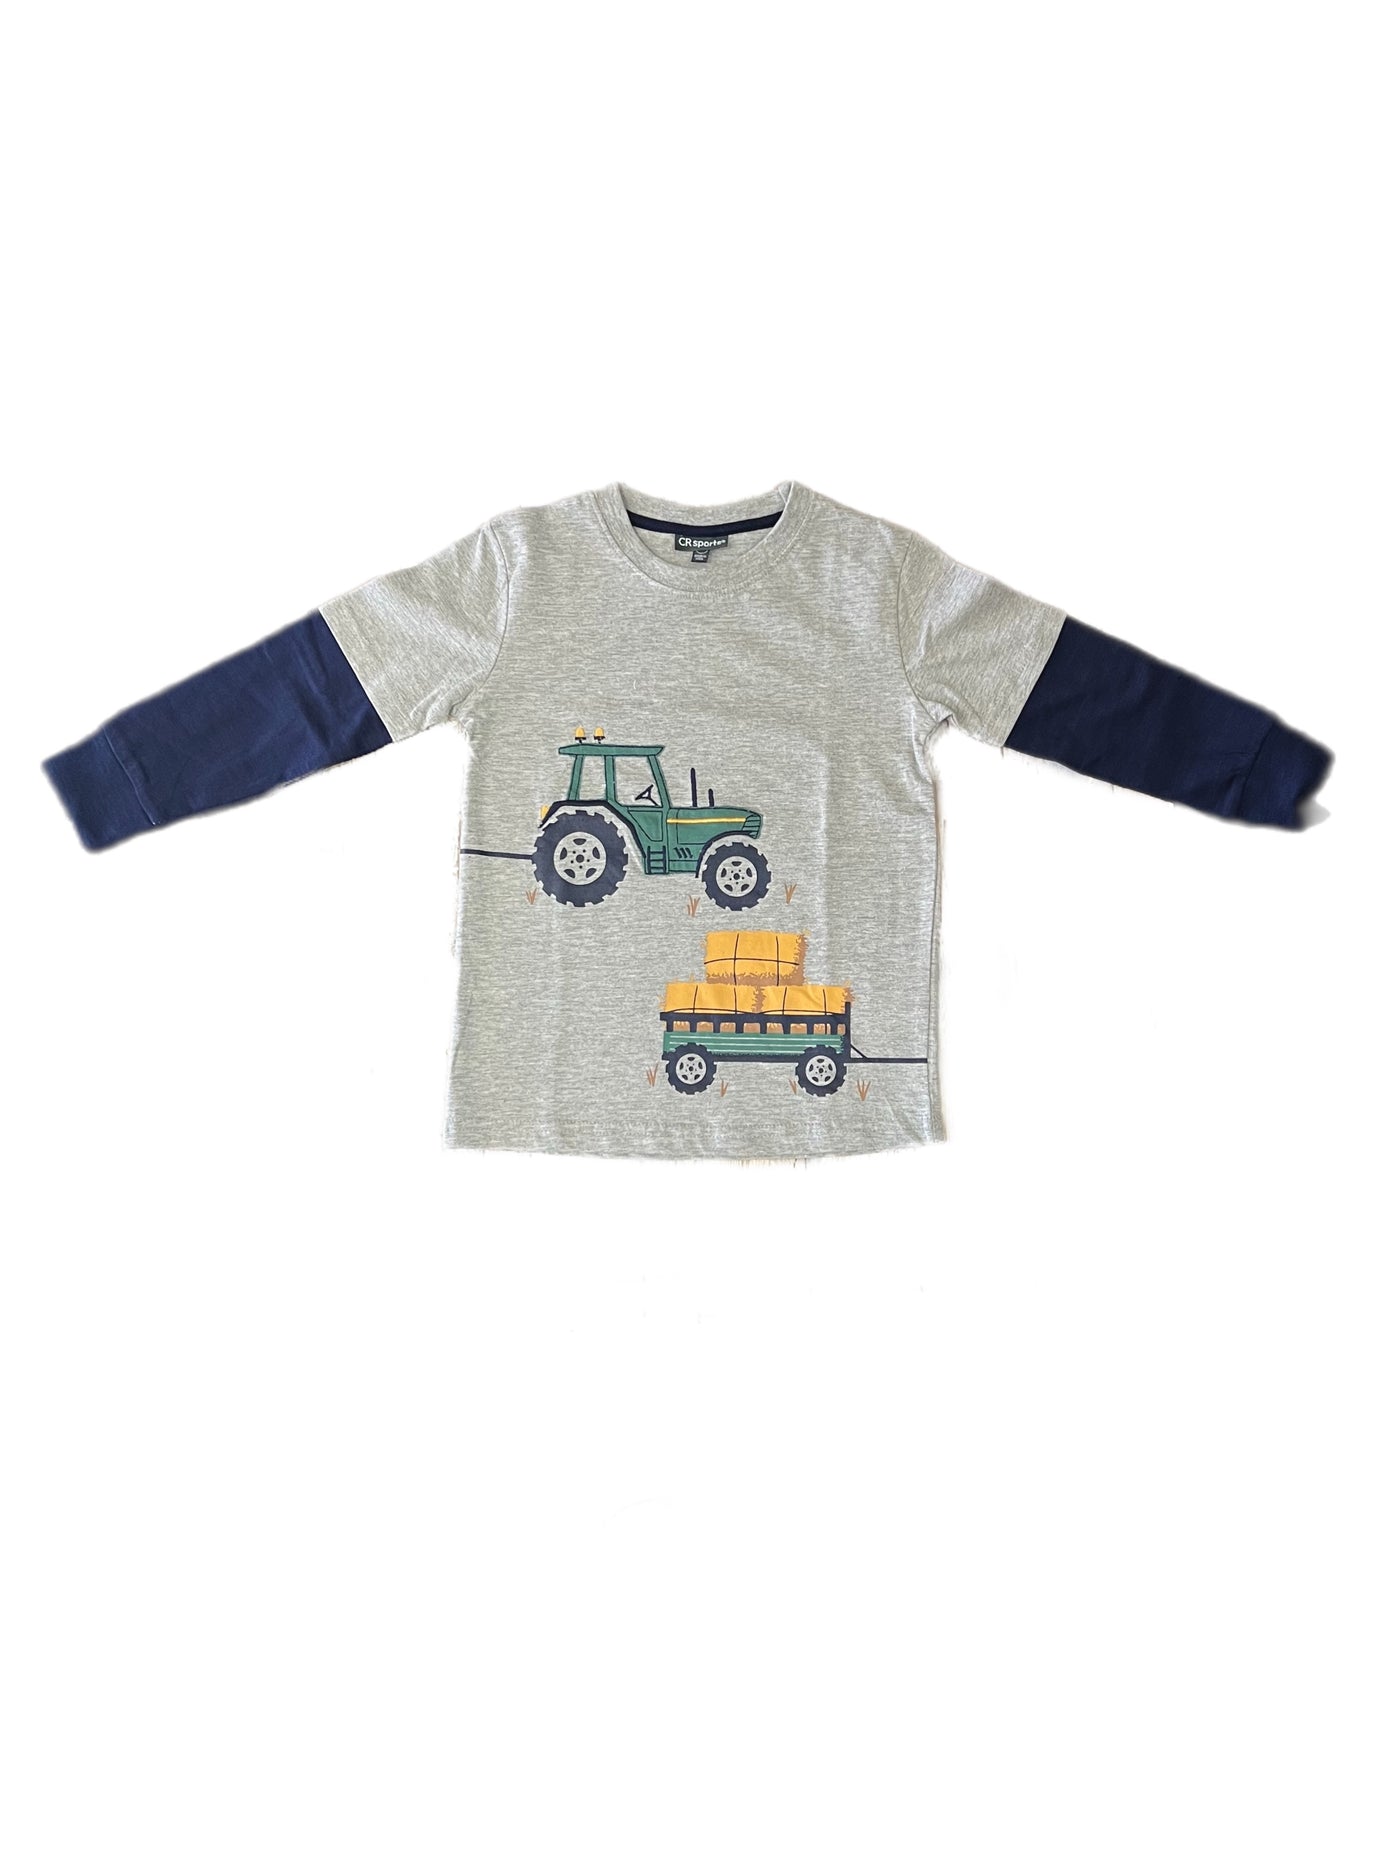 Harvest Tractor Shirt